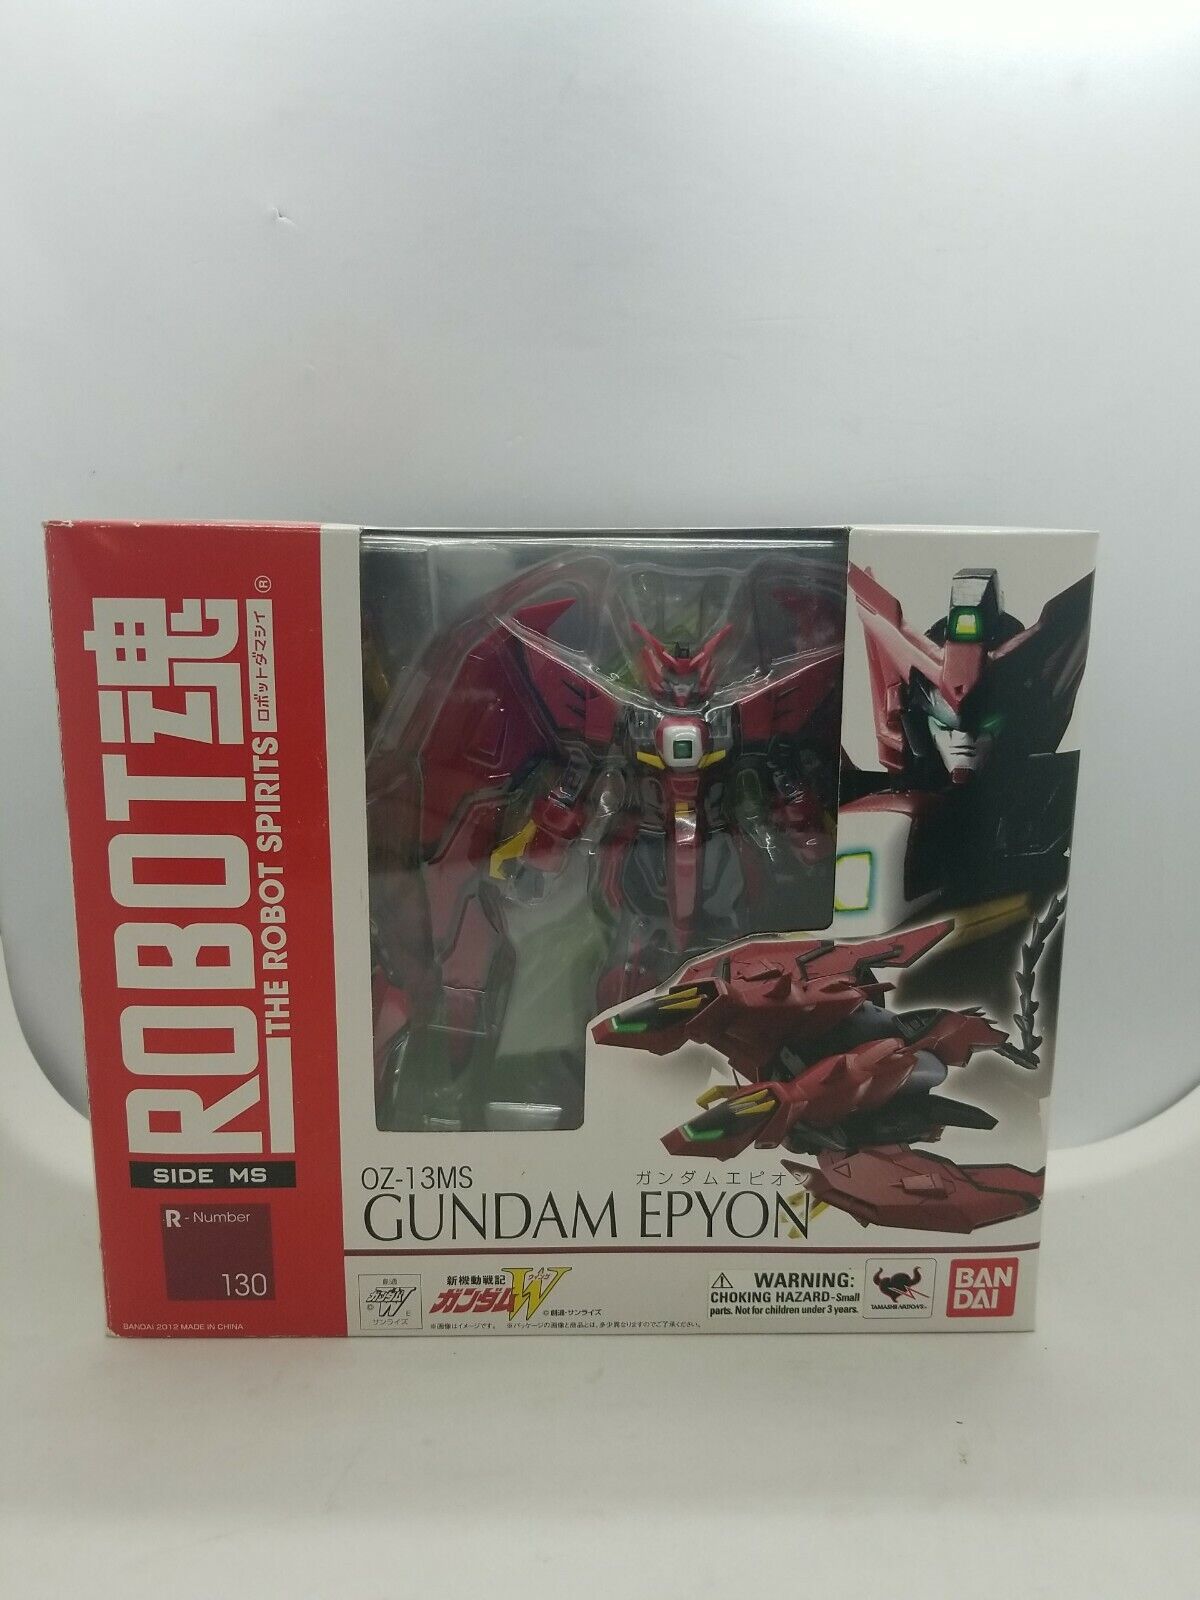 ROBOT soul [SIDE MS] Gundam EPION US SELLER MINT SEALED PERFECT FAST SHIP